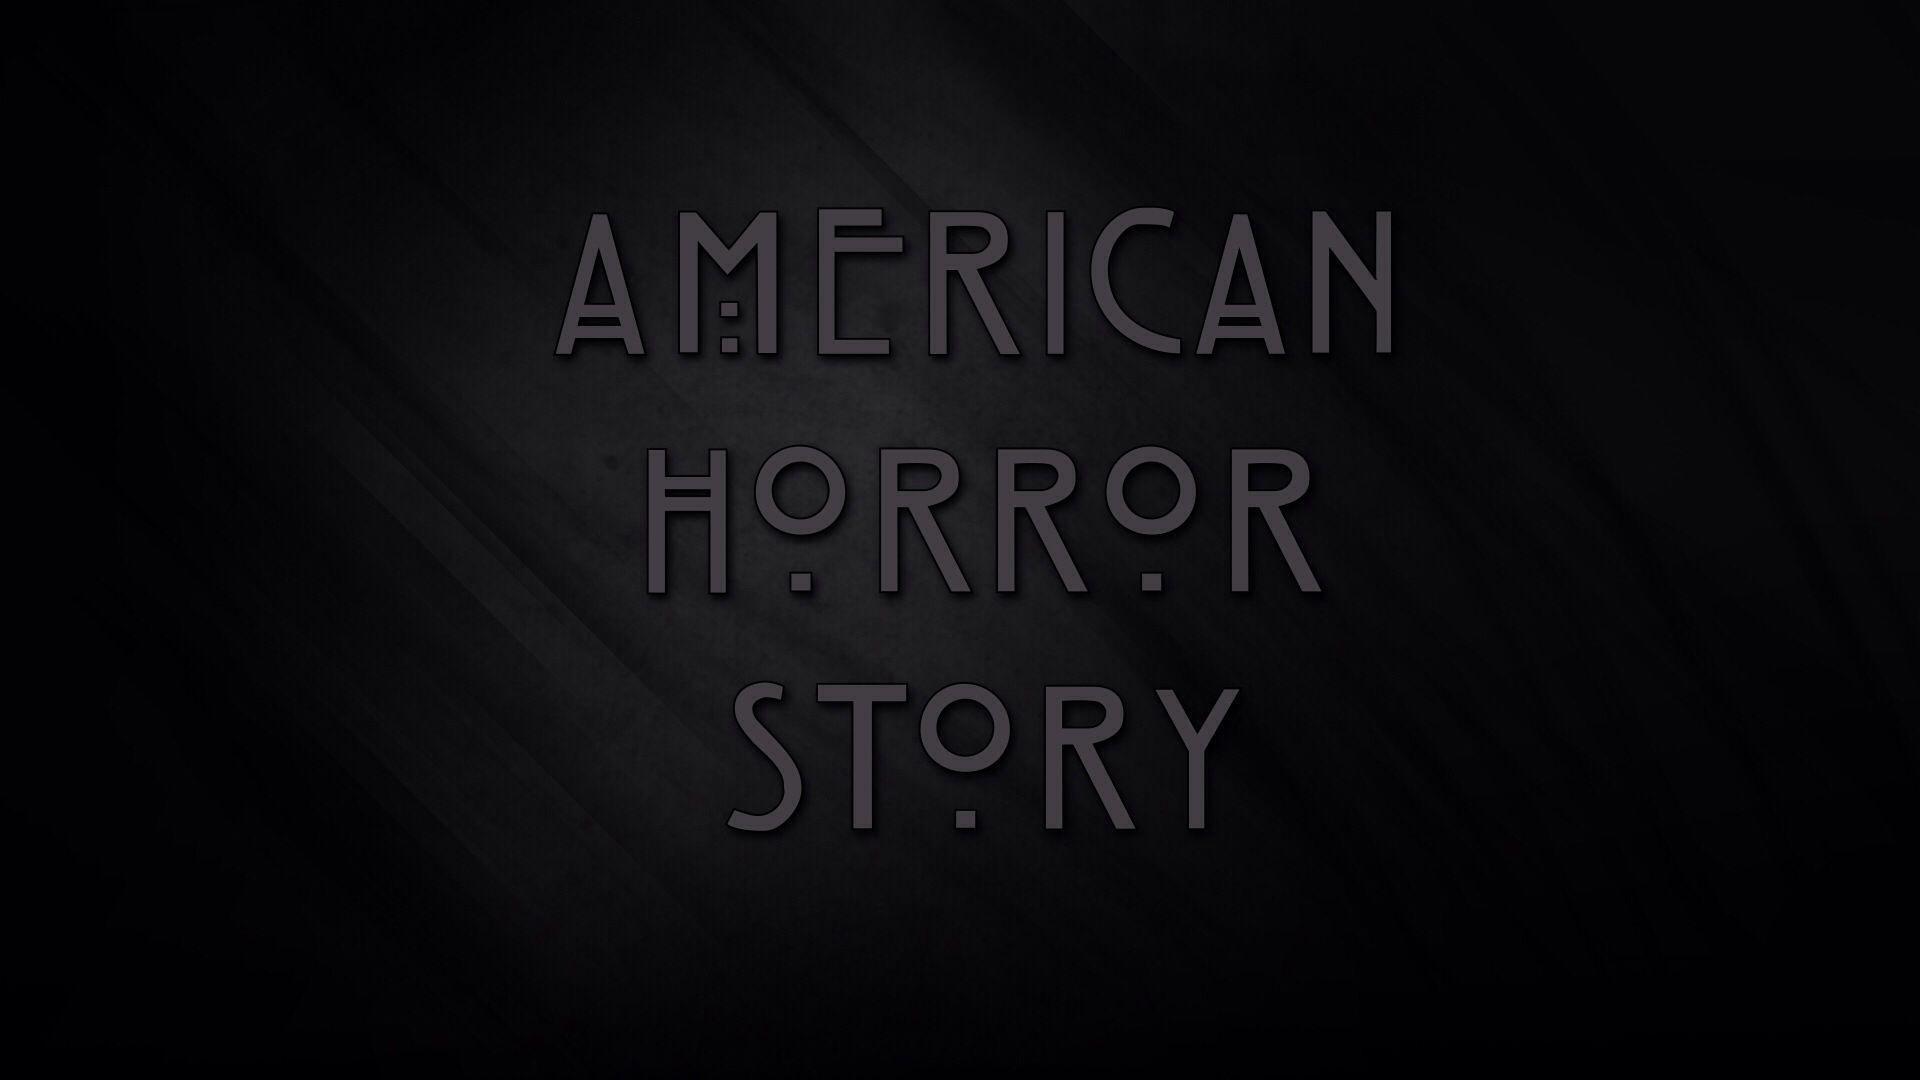 American Horror Story 2K Wallpapers for desk 4K download